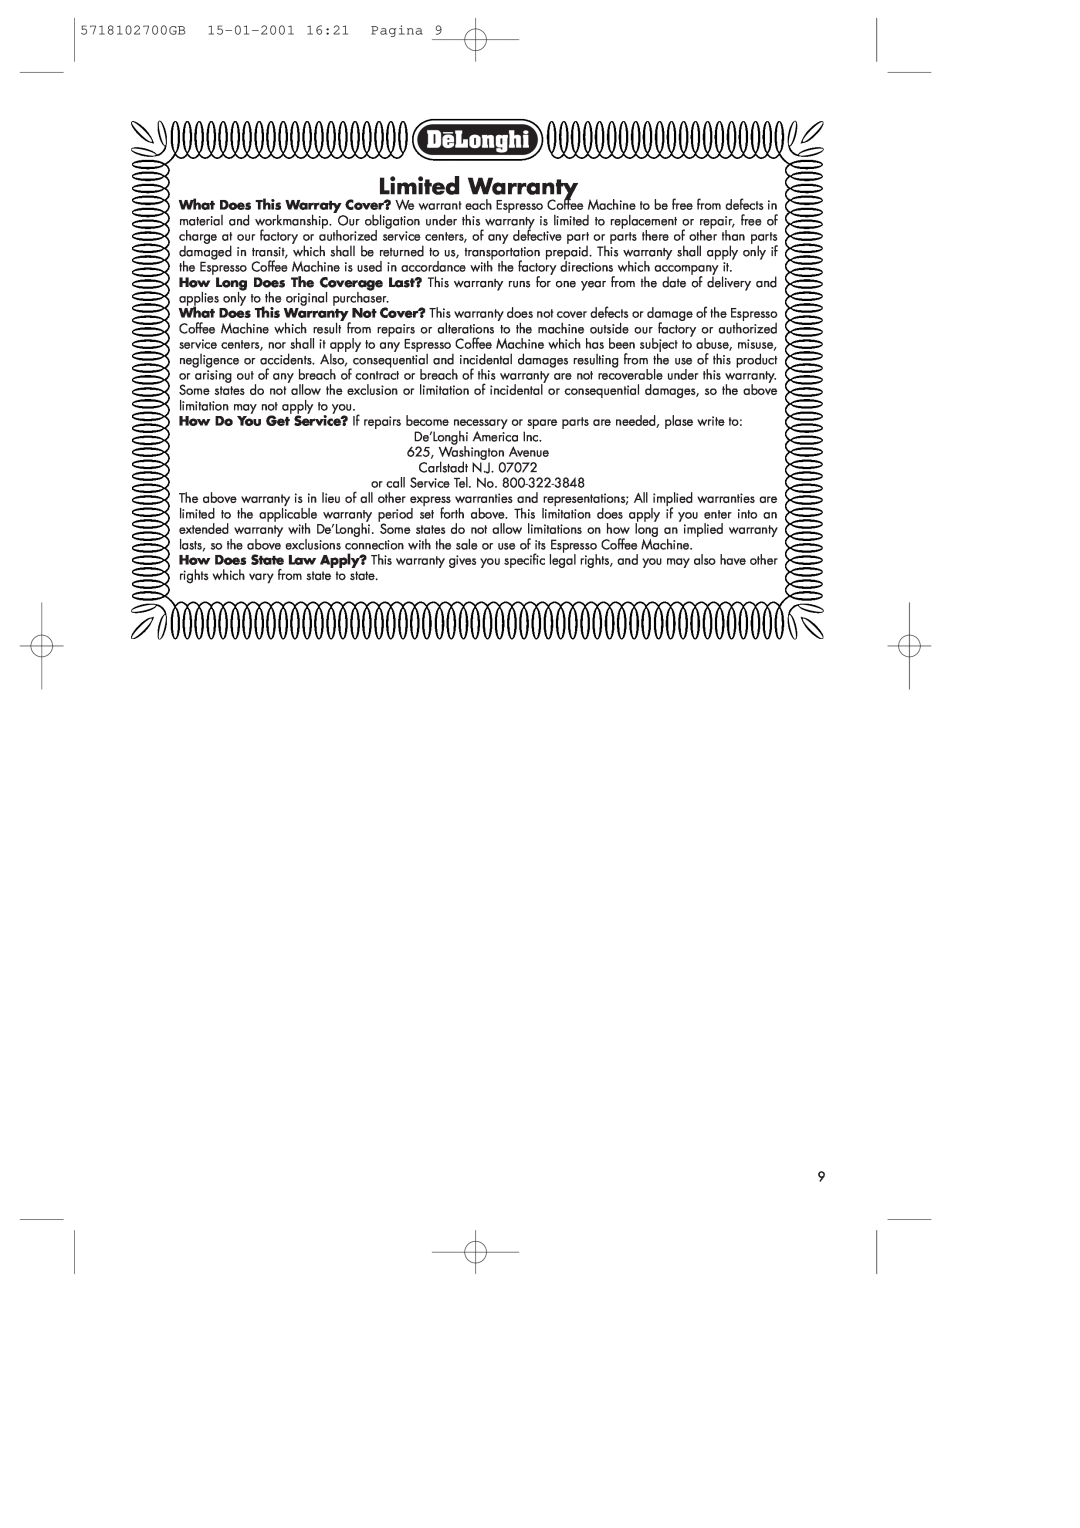 DeLonghi manual Limited Warranty, 5718102700GB 15-01-2001 1621 Pagina 